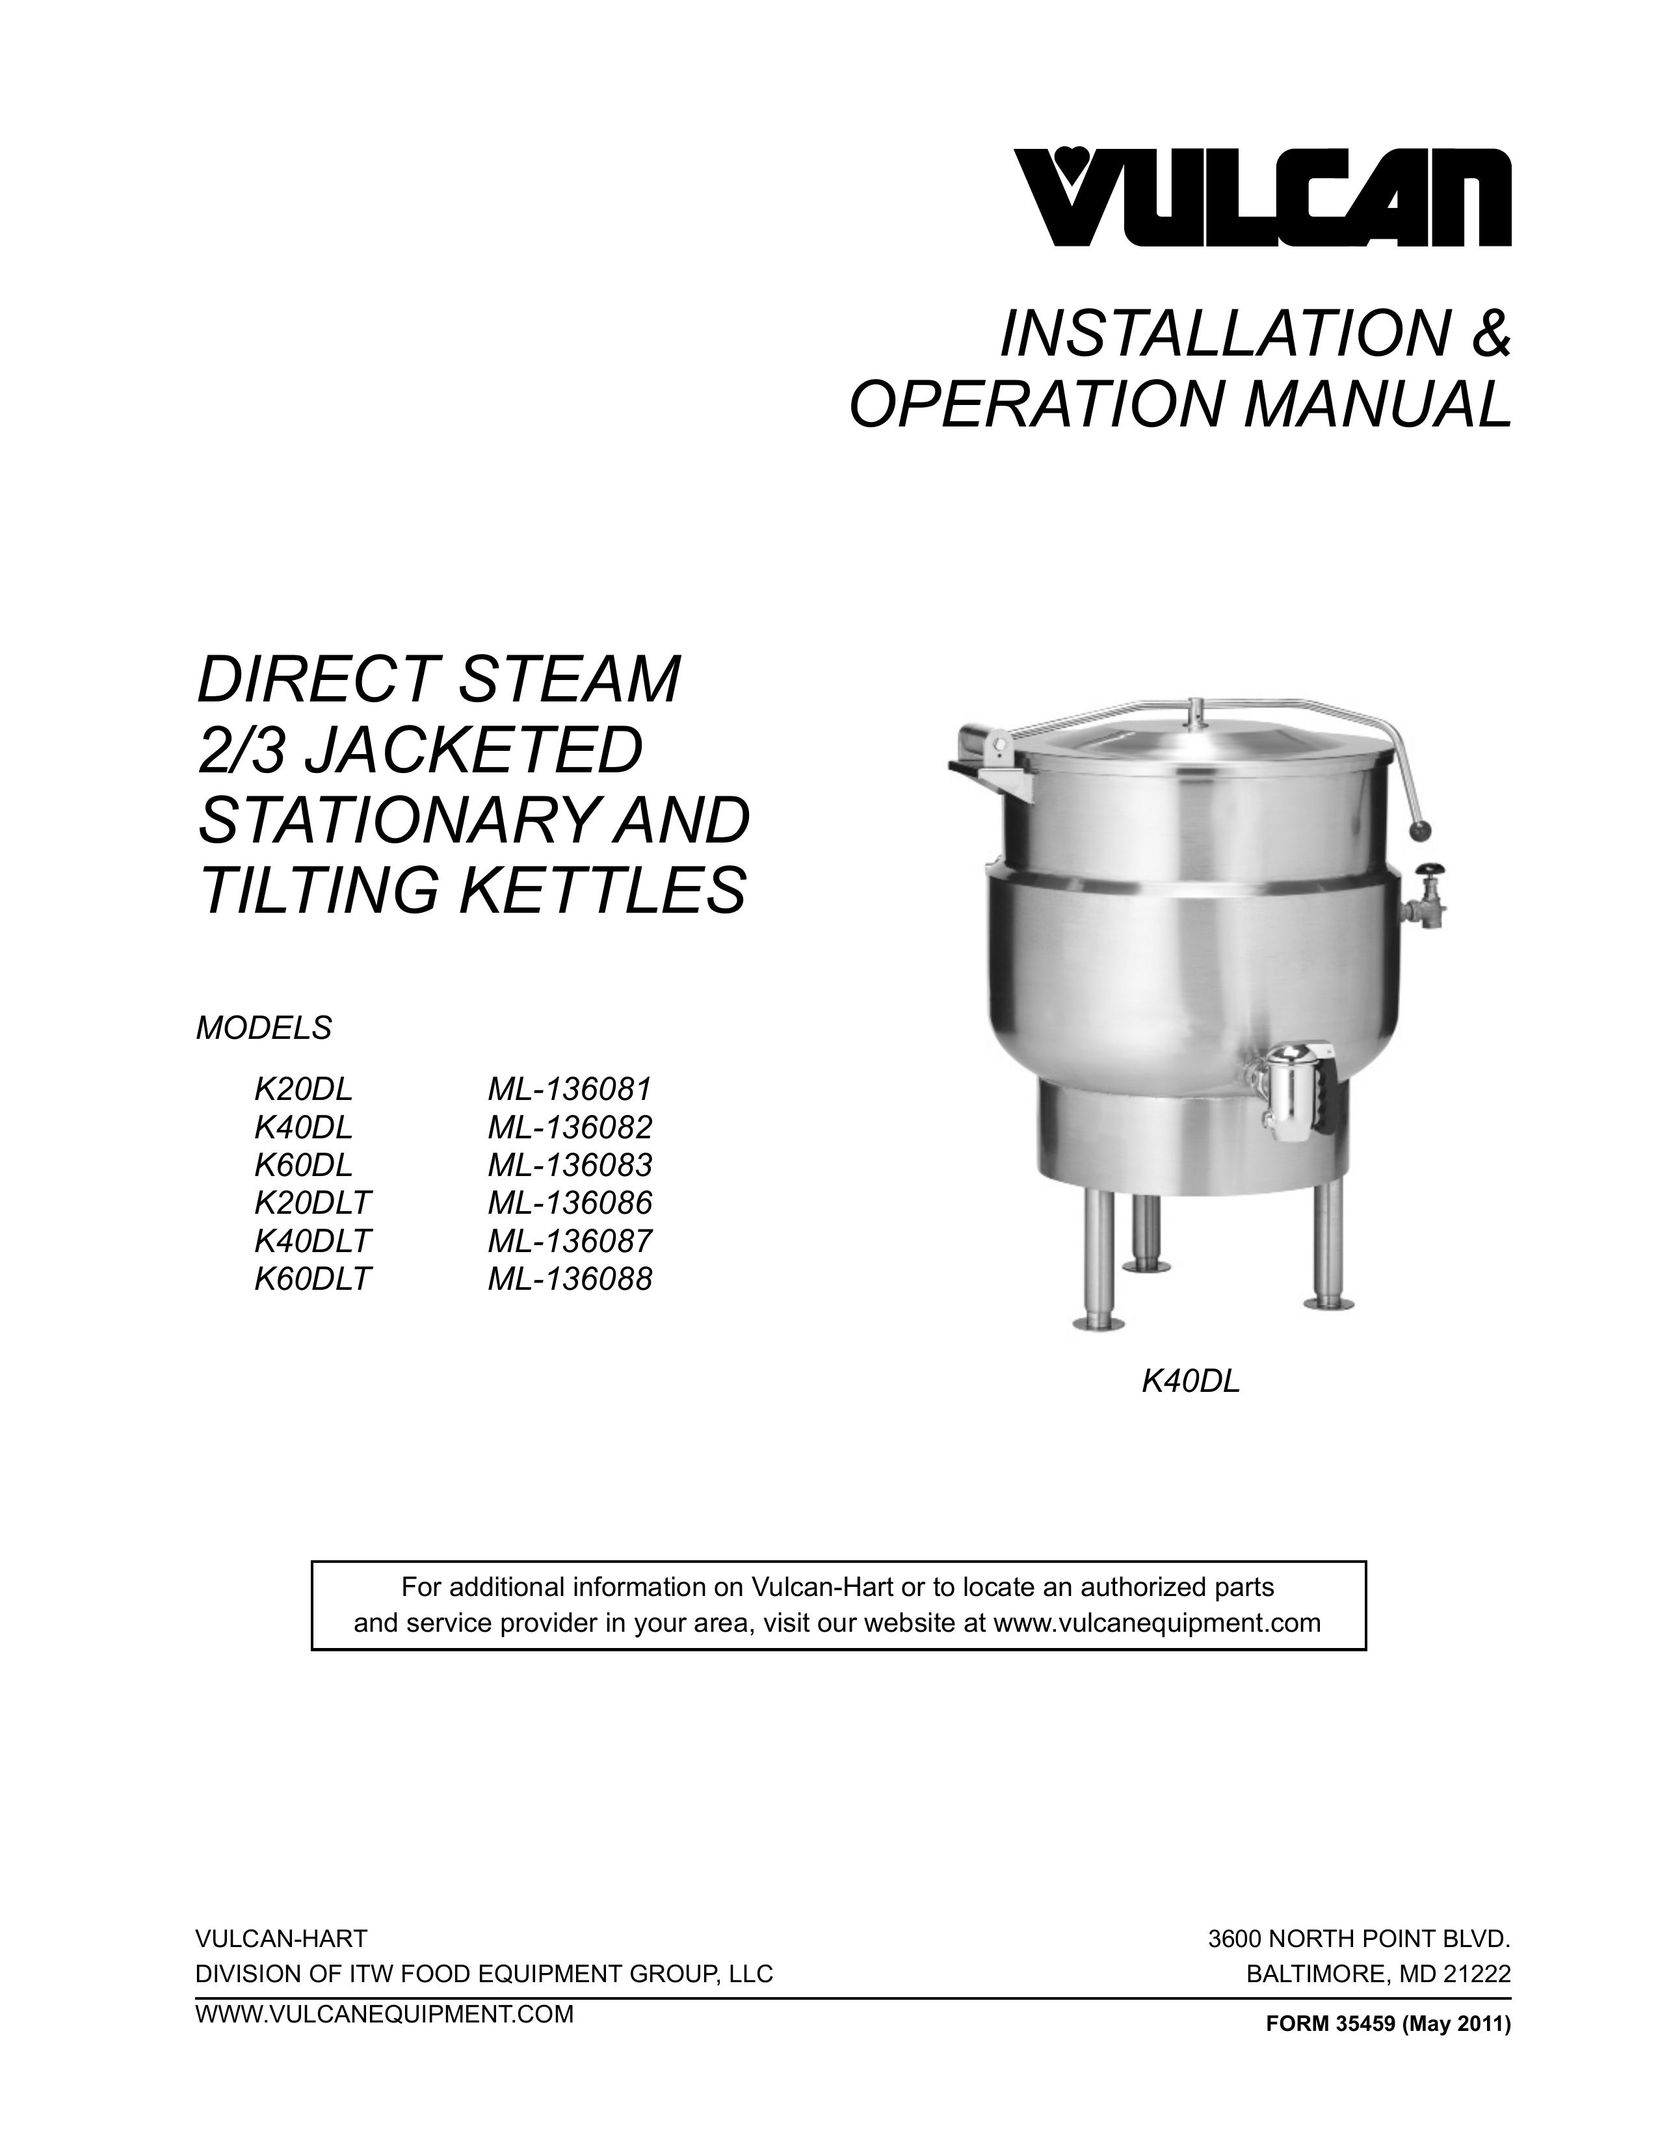 Vulcan-Hart K60DL Hot Beverage Maker User Manual